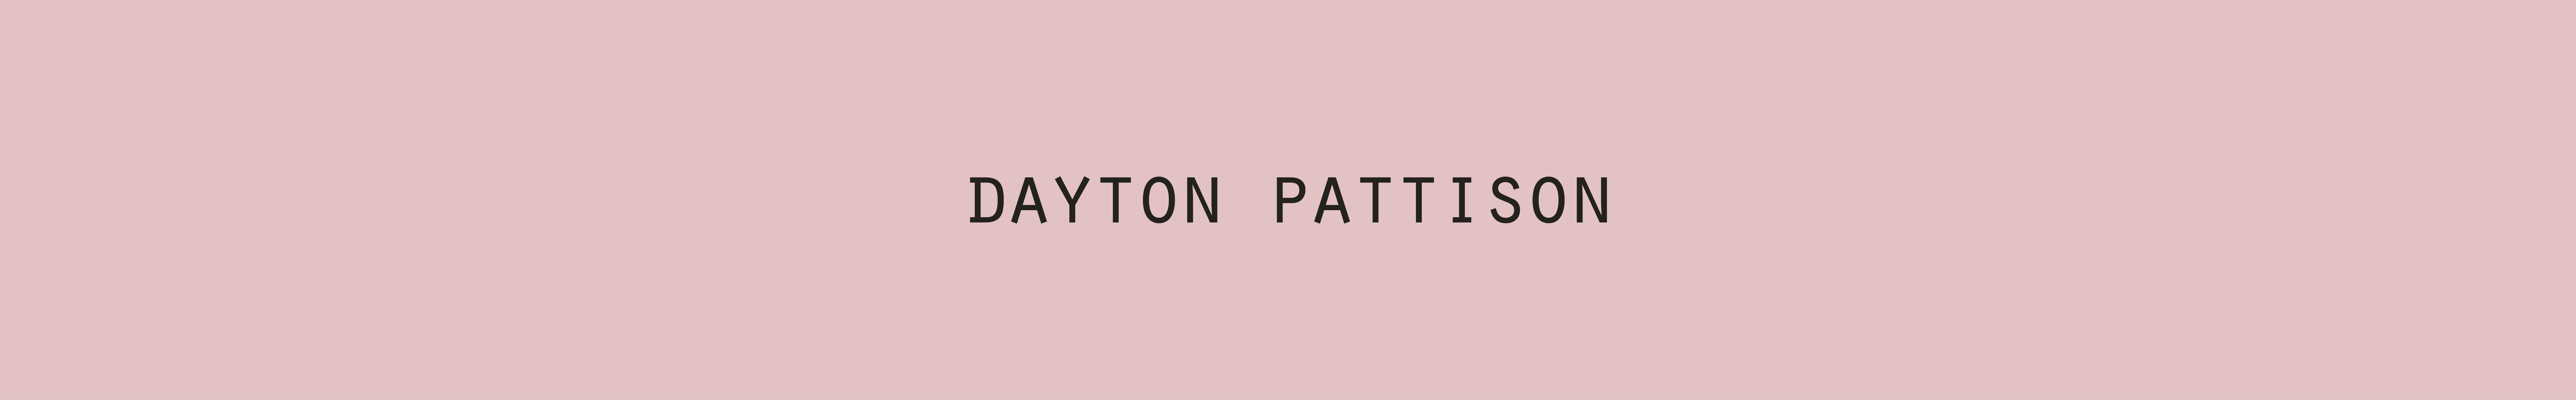 Dayton Pattison's profile banner